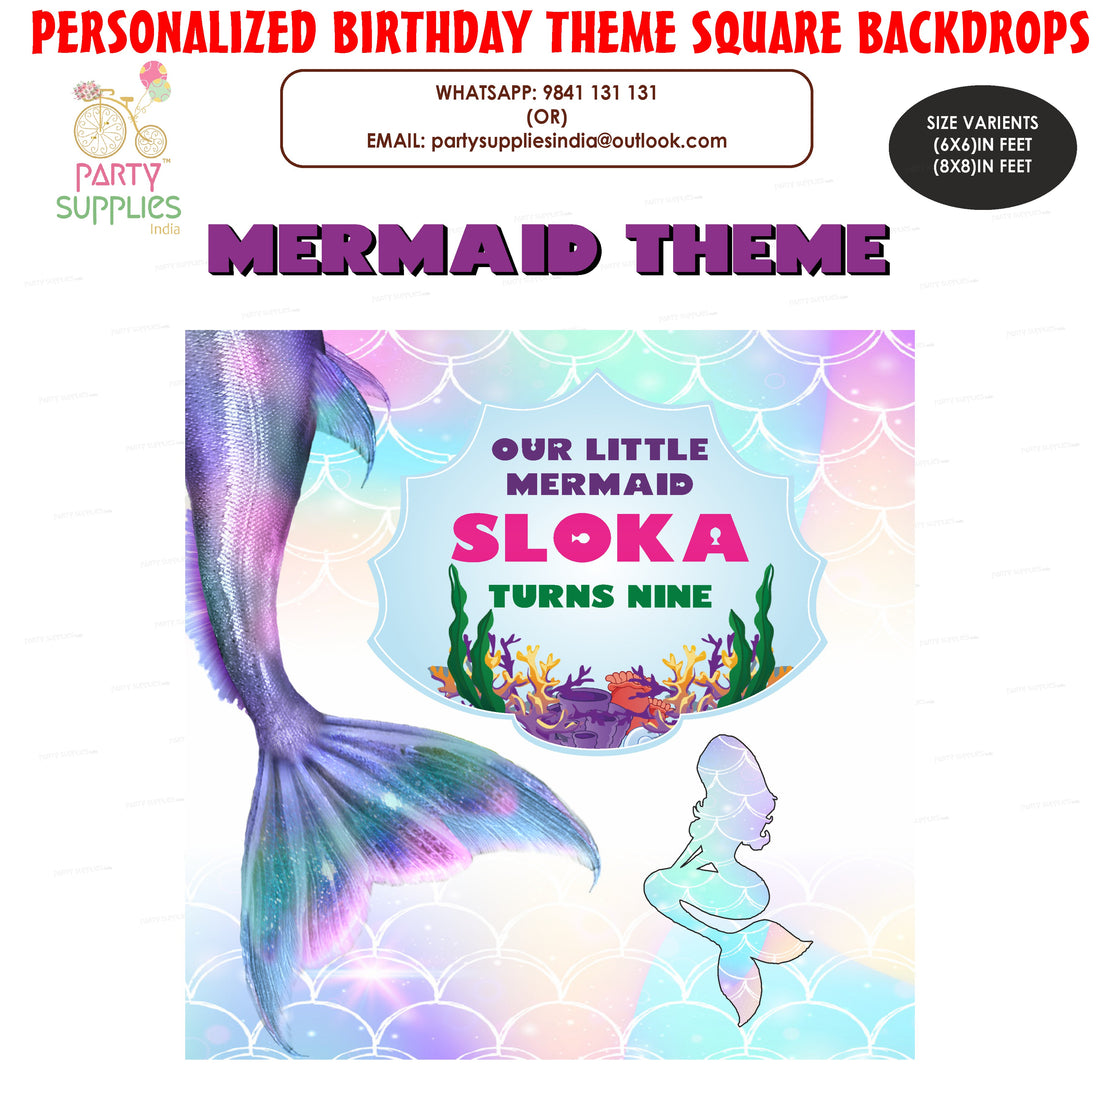 Mermaid Theme Personalized Square Backdrop